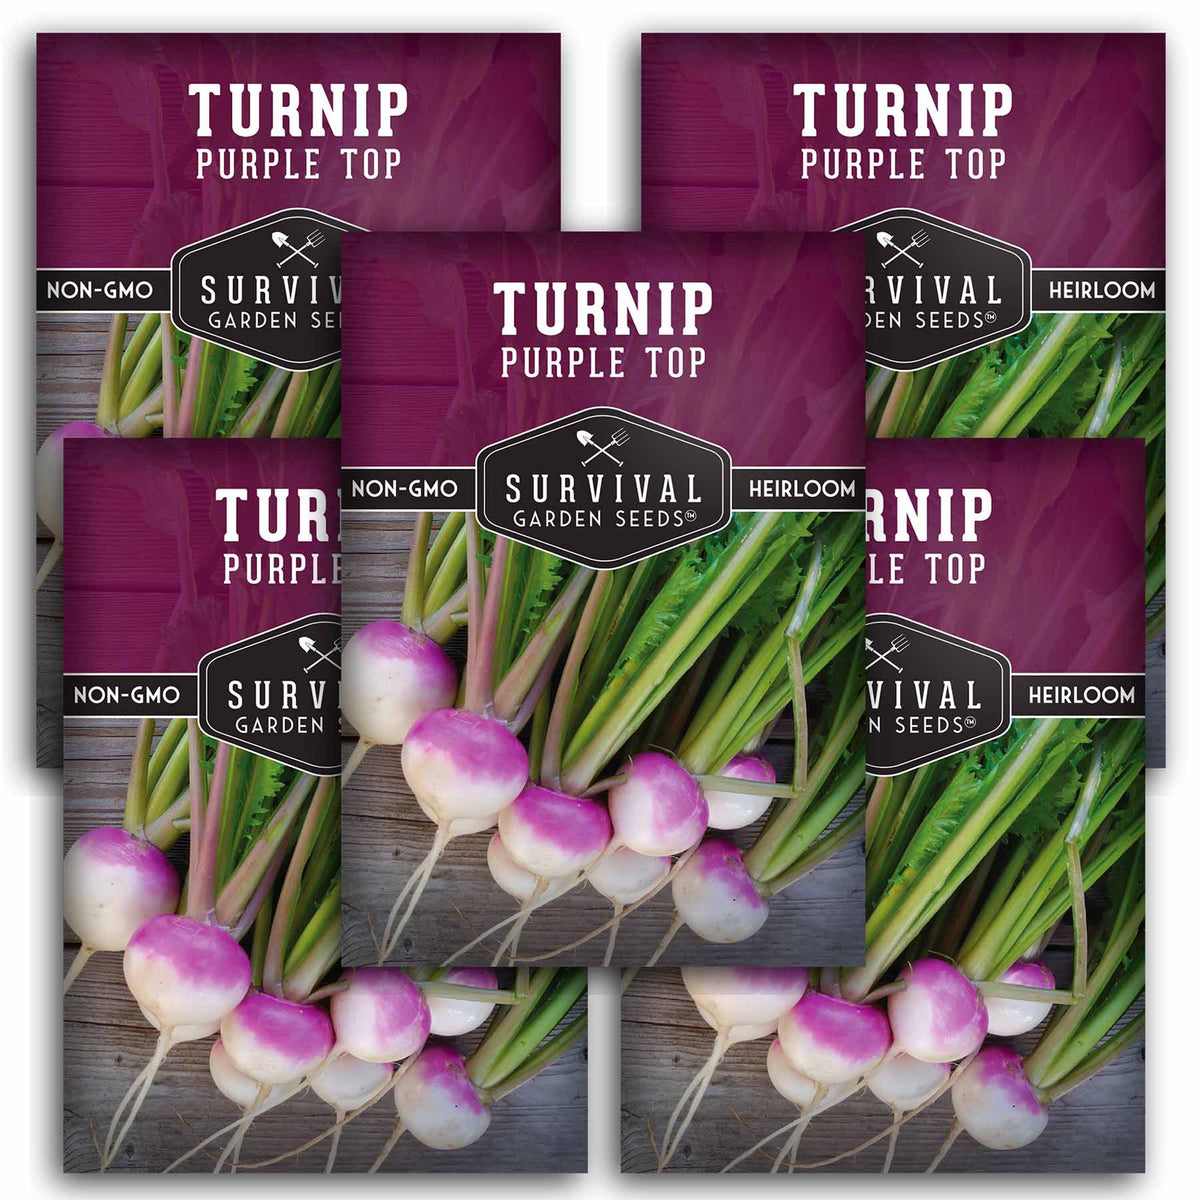 5 packets of Purple Top Turnip seeds